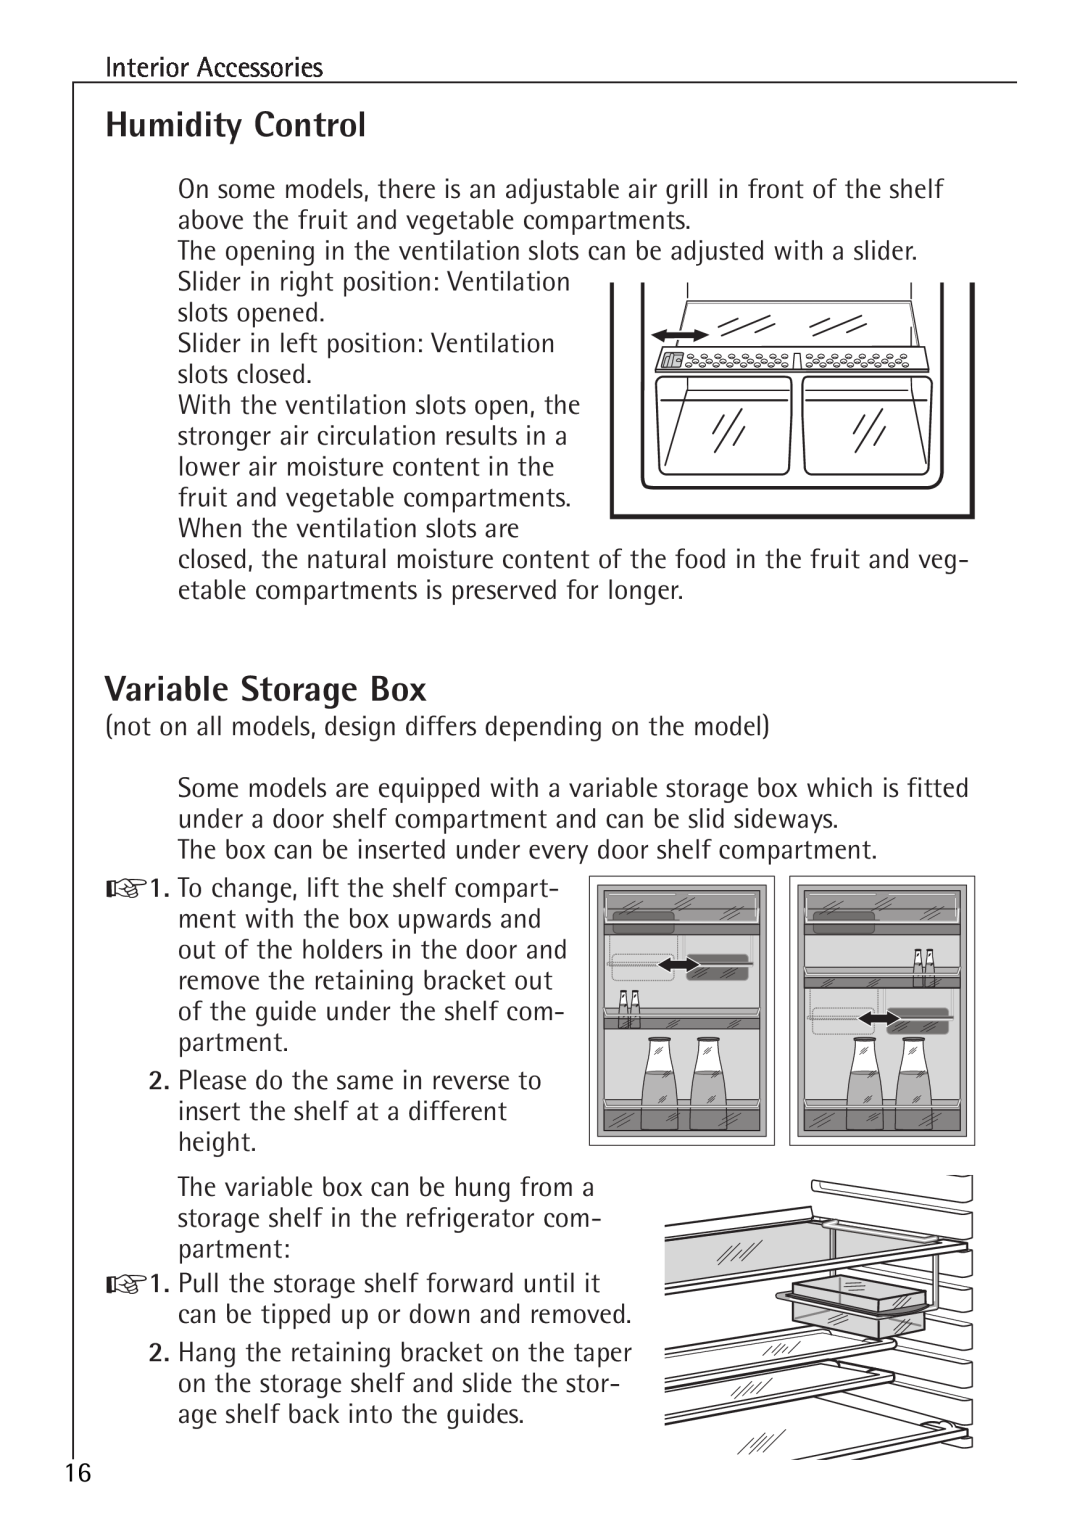 Electrolux K 98840-4 i, K 91240-4 i manual Humidity Control, Variable Storage Box 